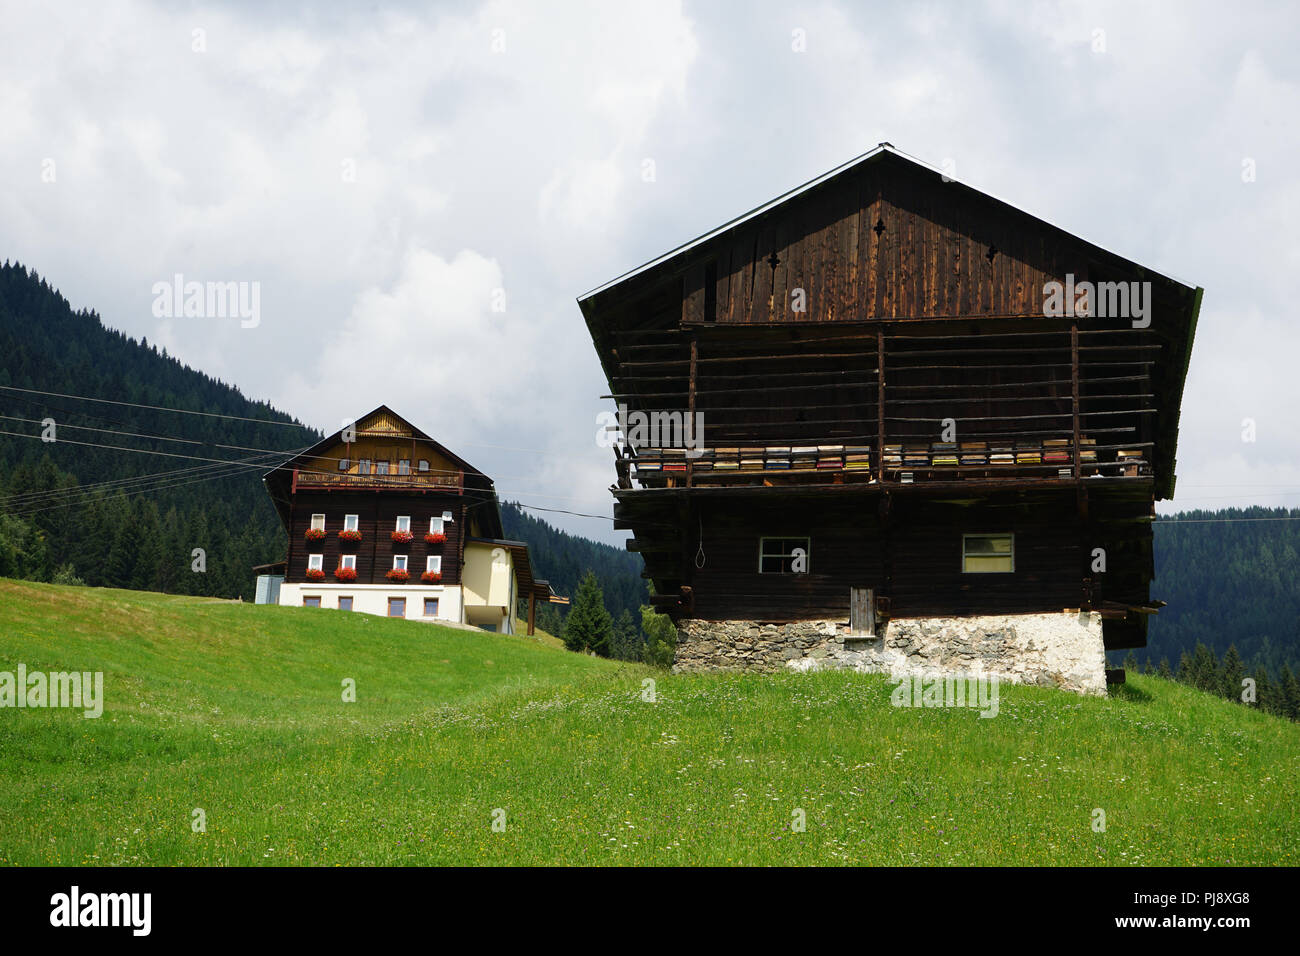 Le Berghof, Almgebiet, Bergwiesen, Lesachtal, Kärnten, Autriche Banque D'Images